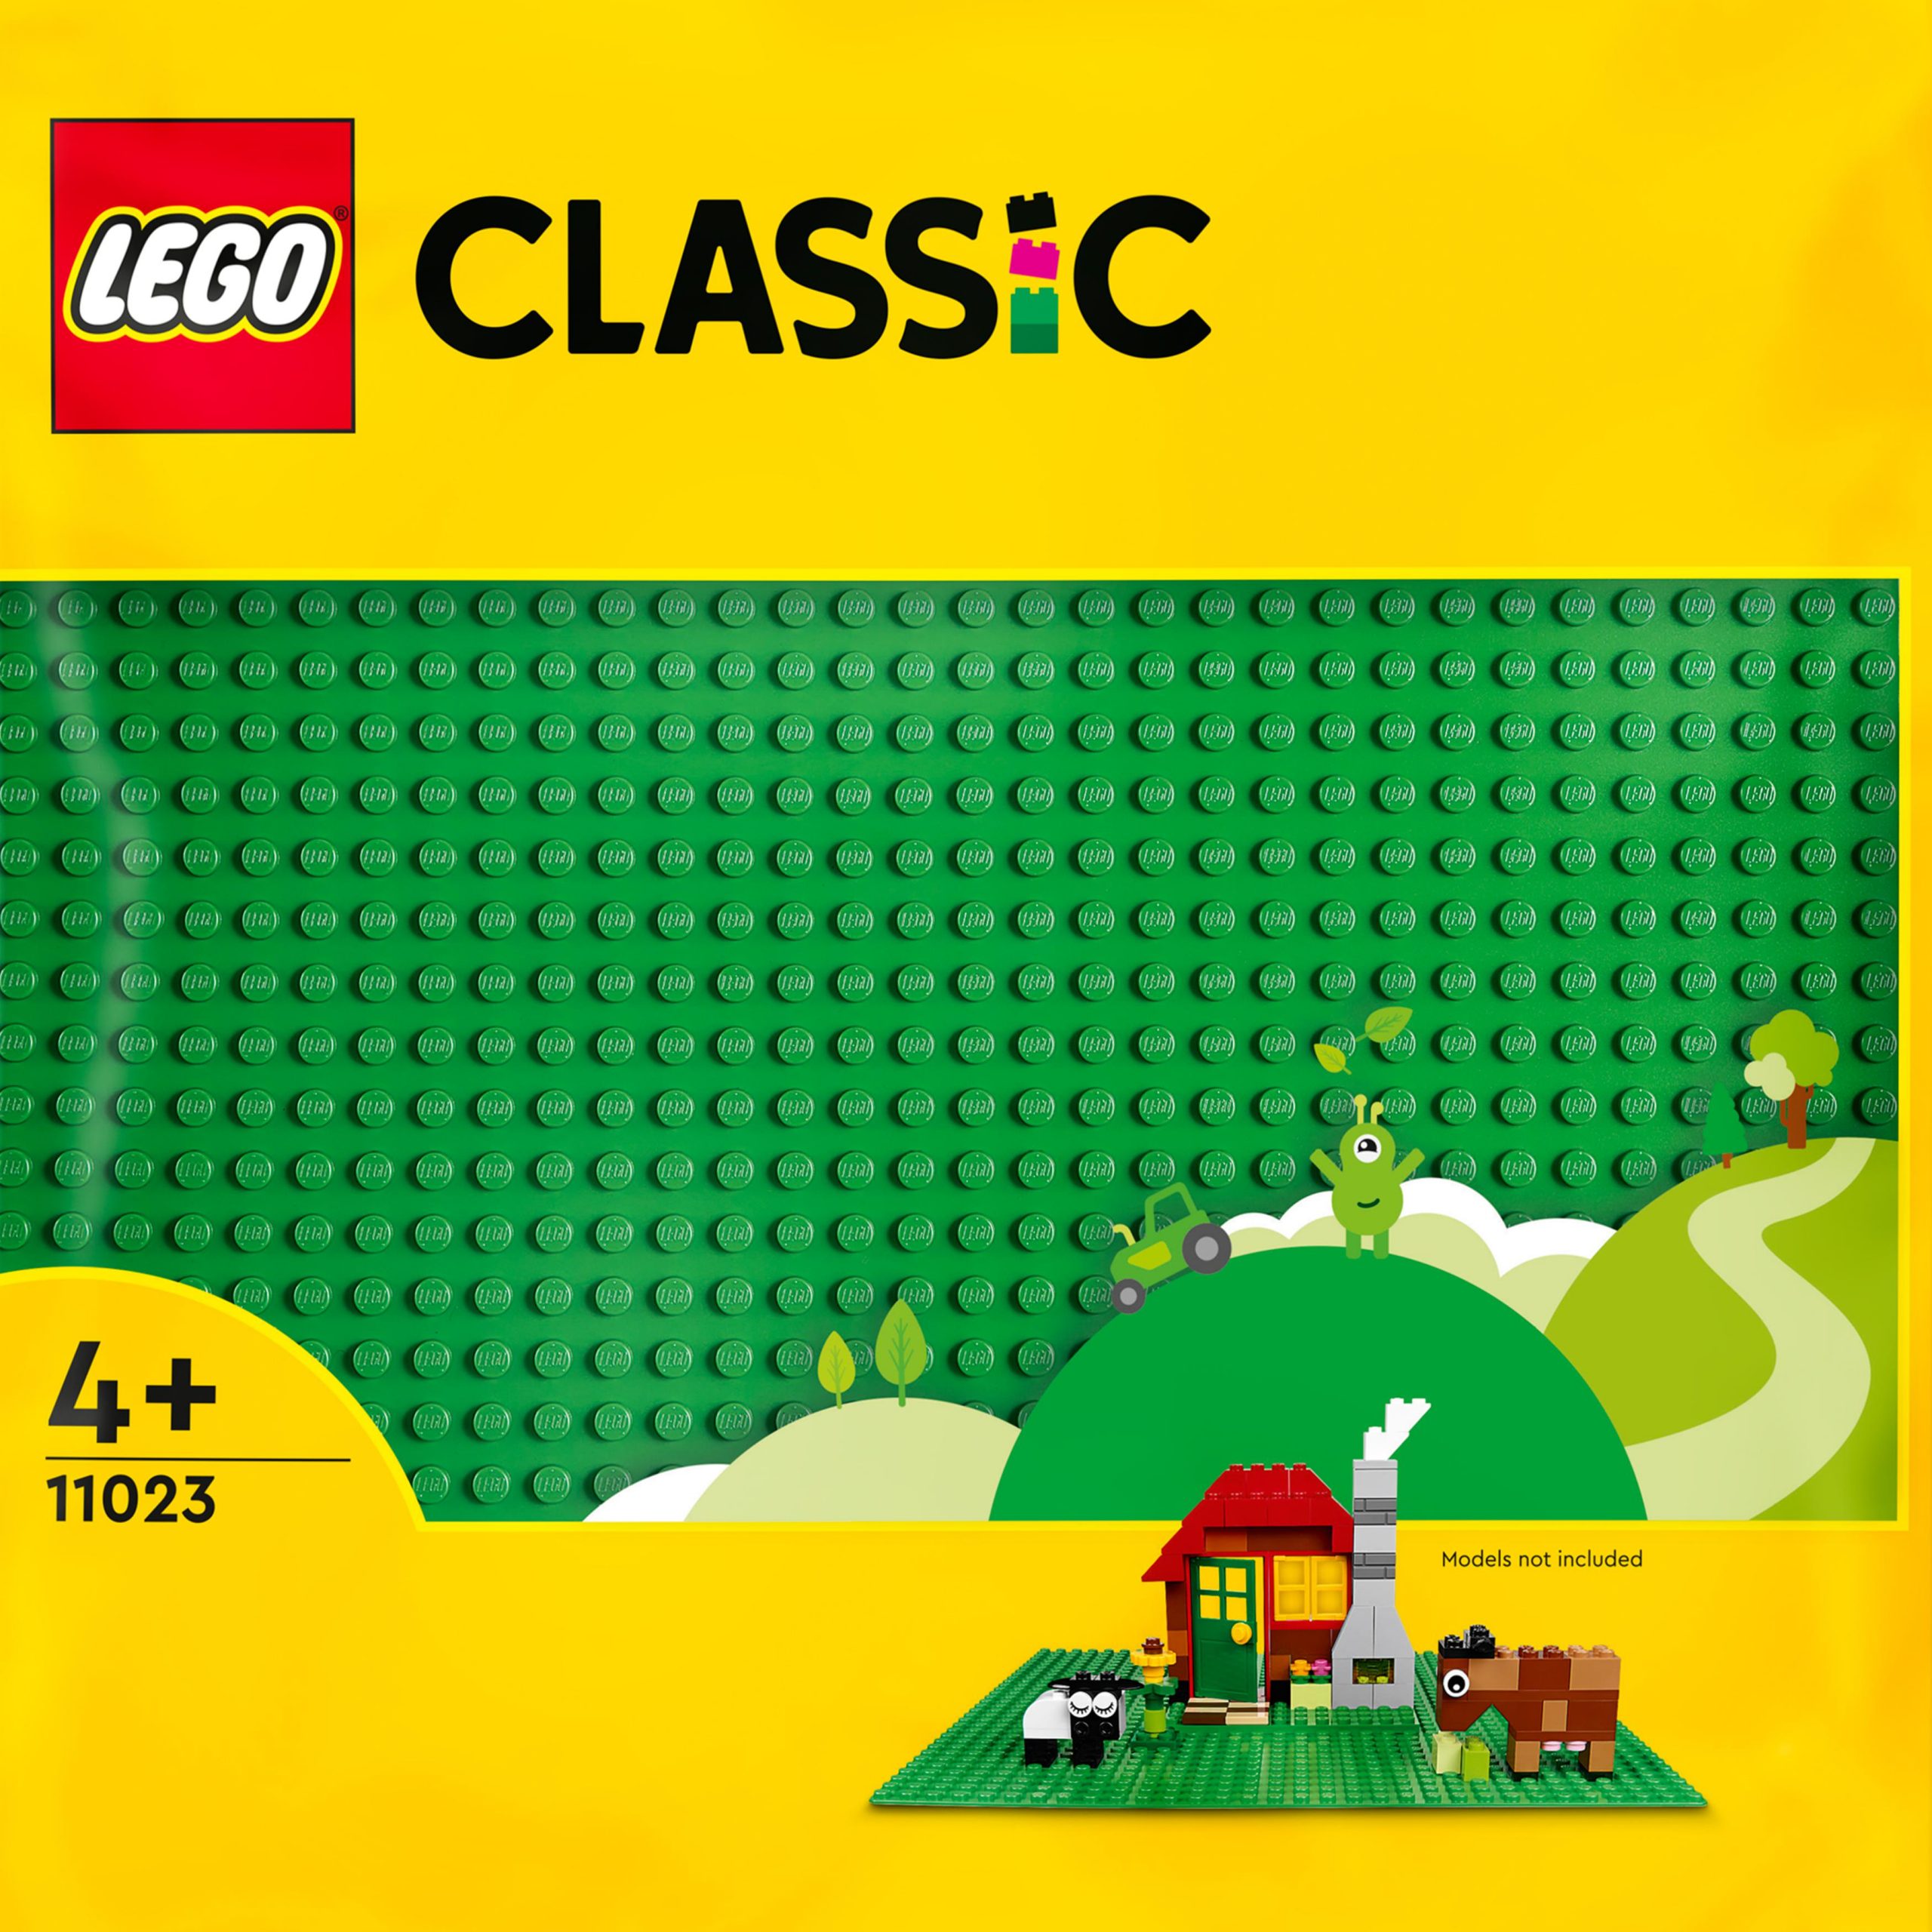 LEGO CLASSIC - Toys Center